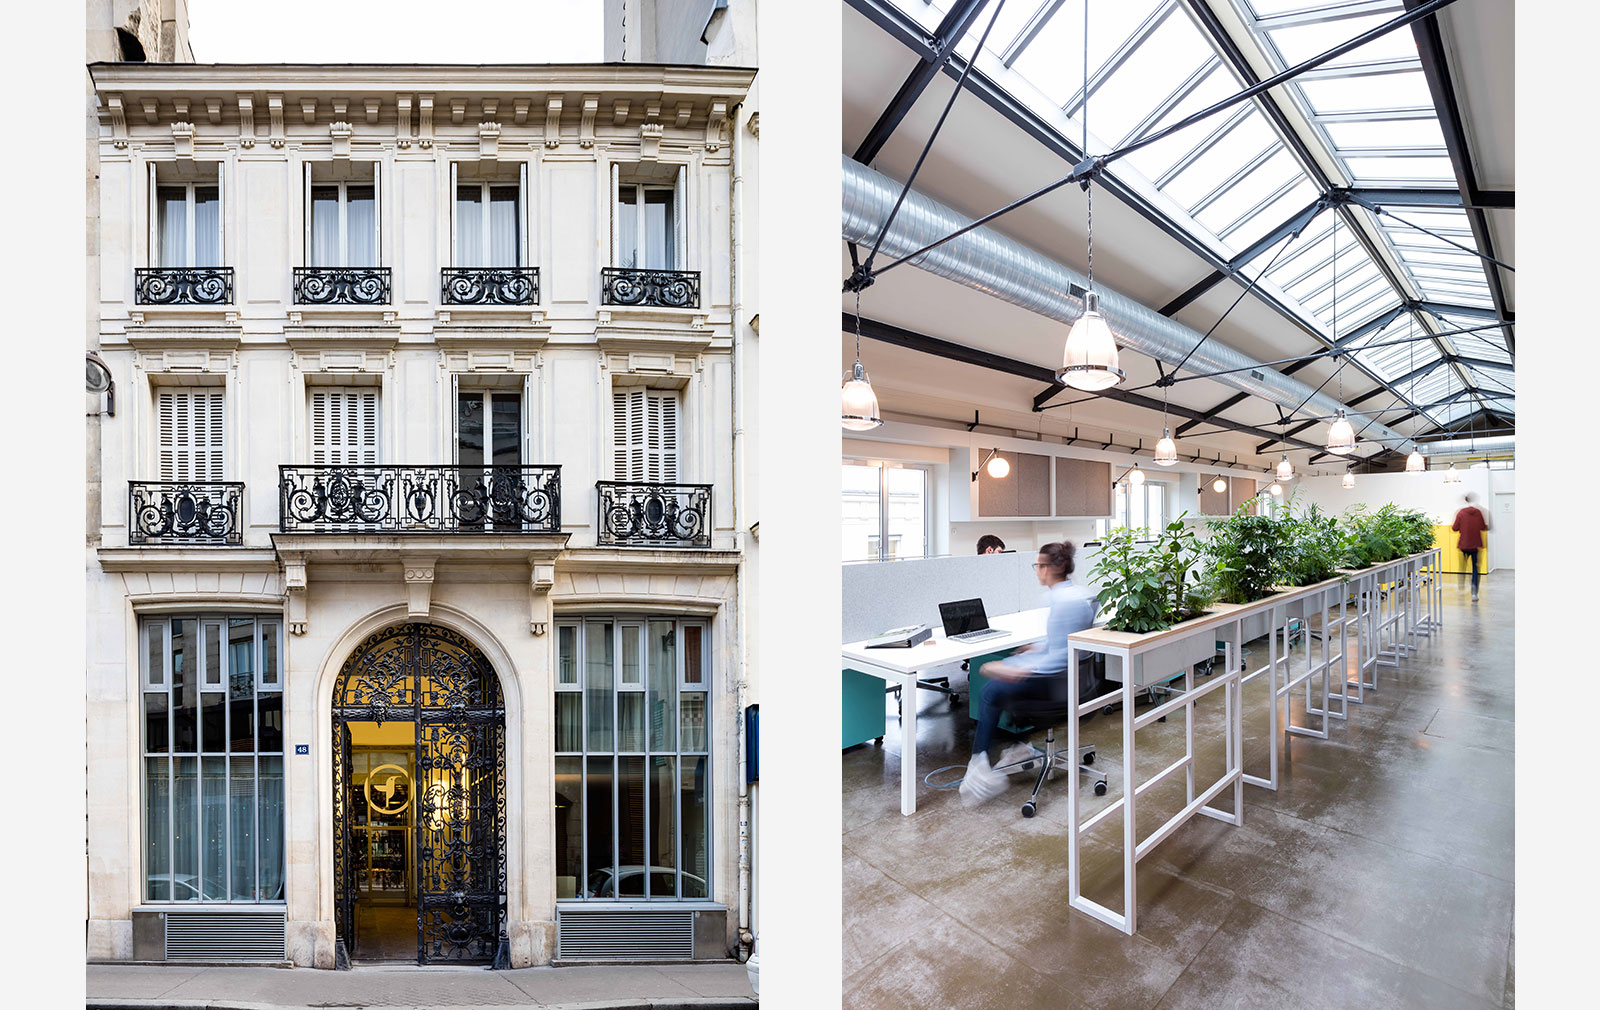 Deskopolitan coworking space in Paris, designed by MoreySmith